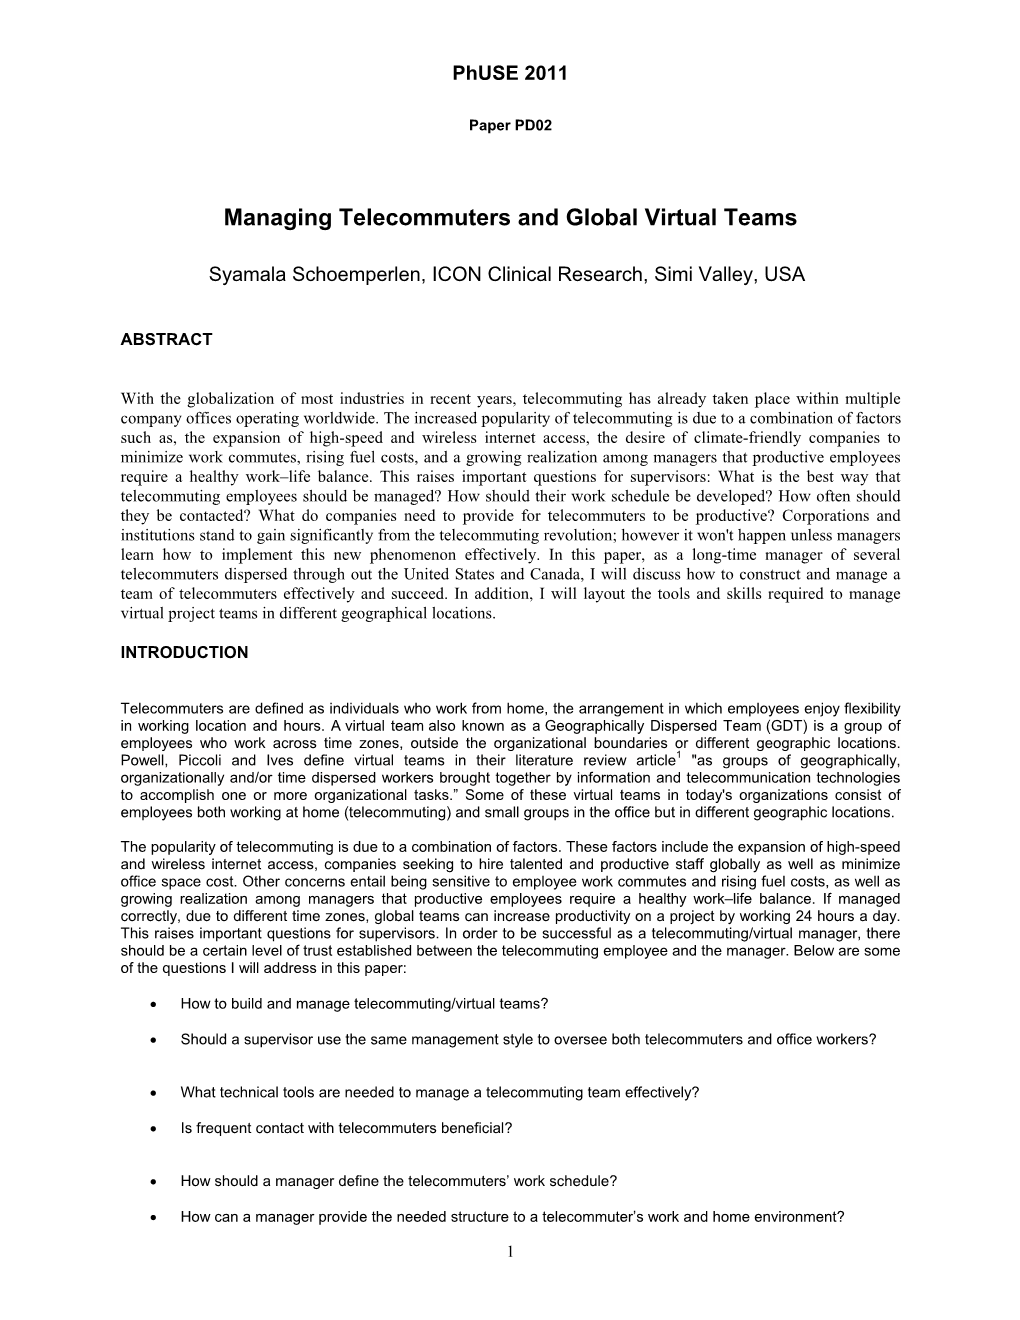 Managing Telecommuters and Global Virtual Teams